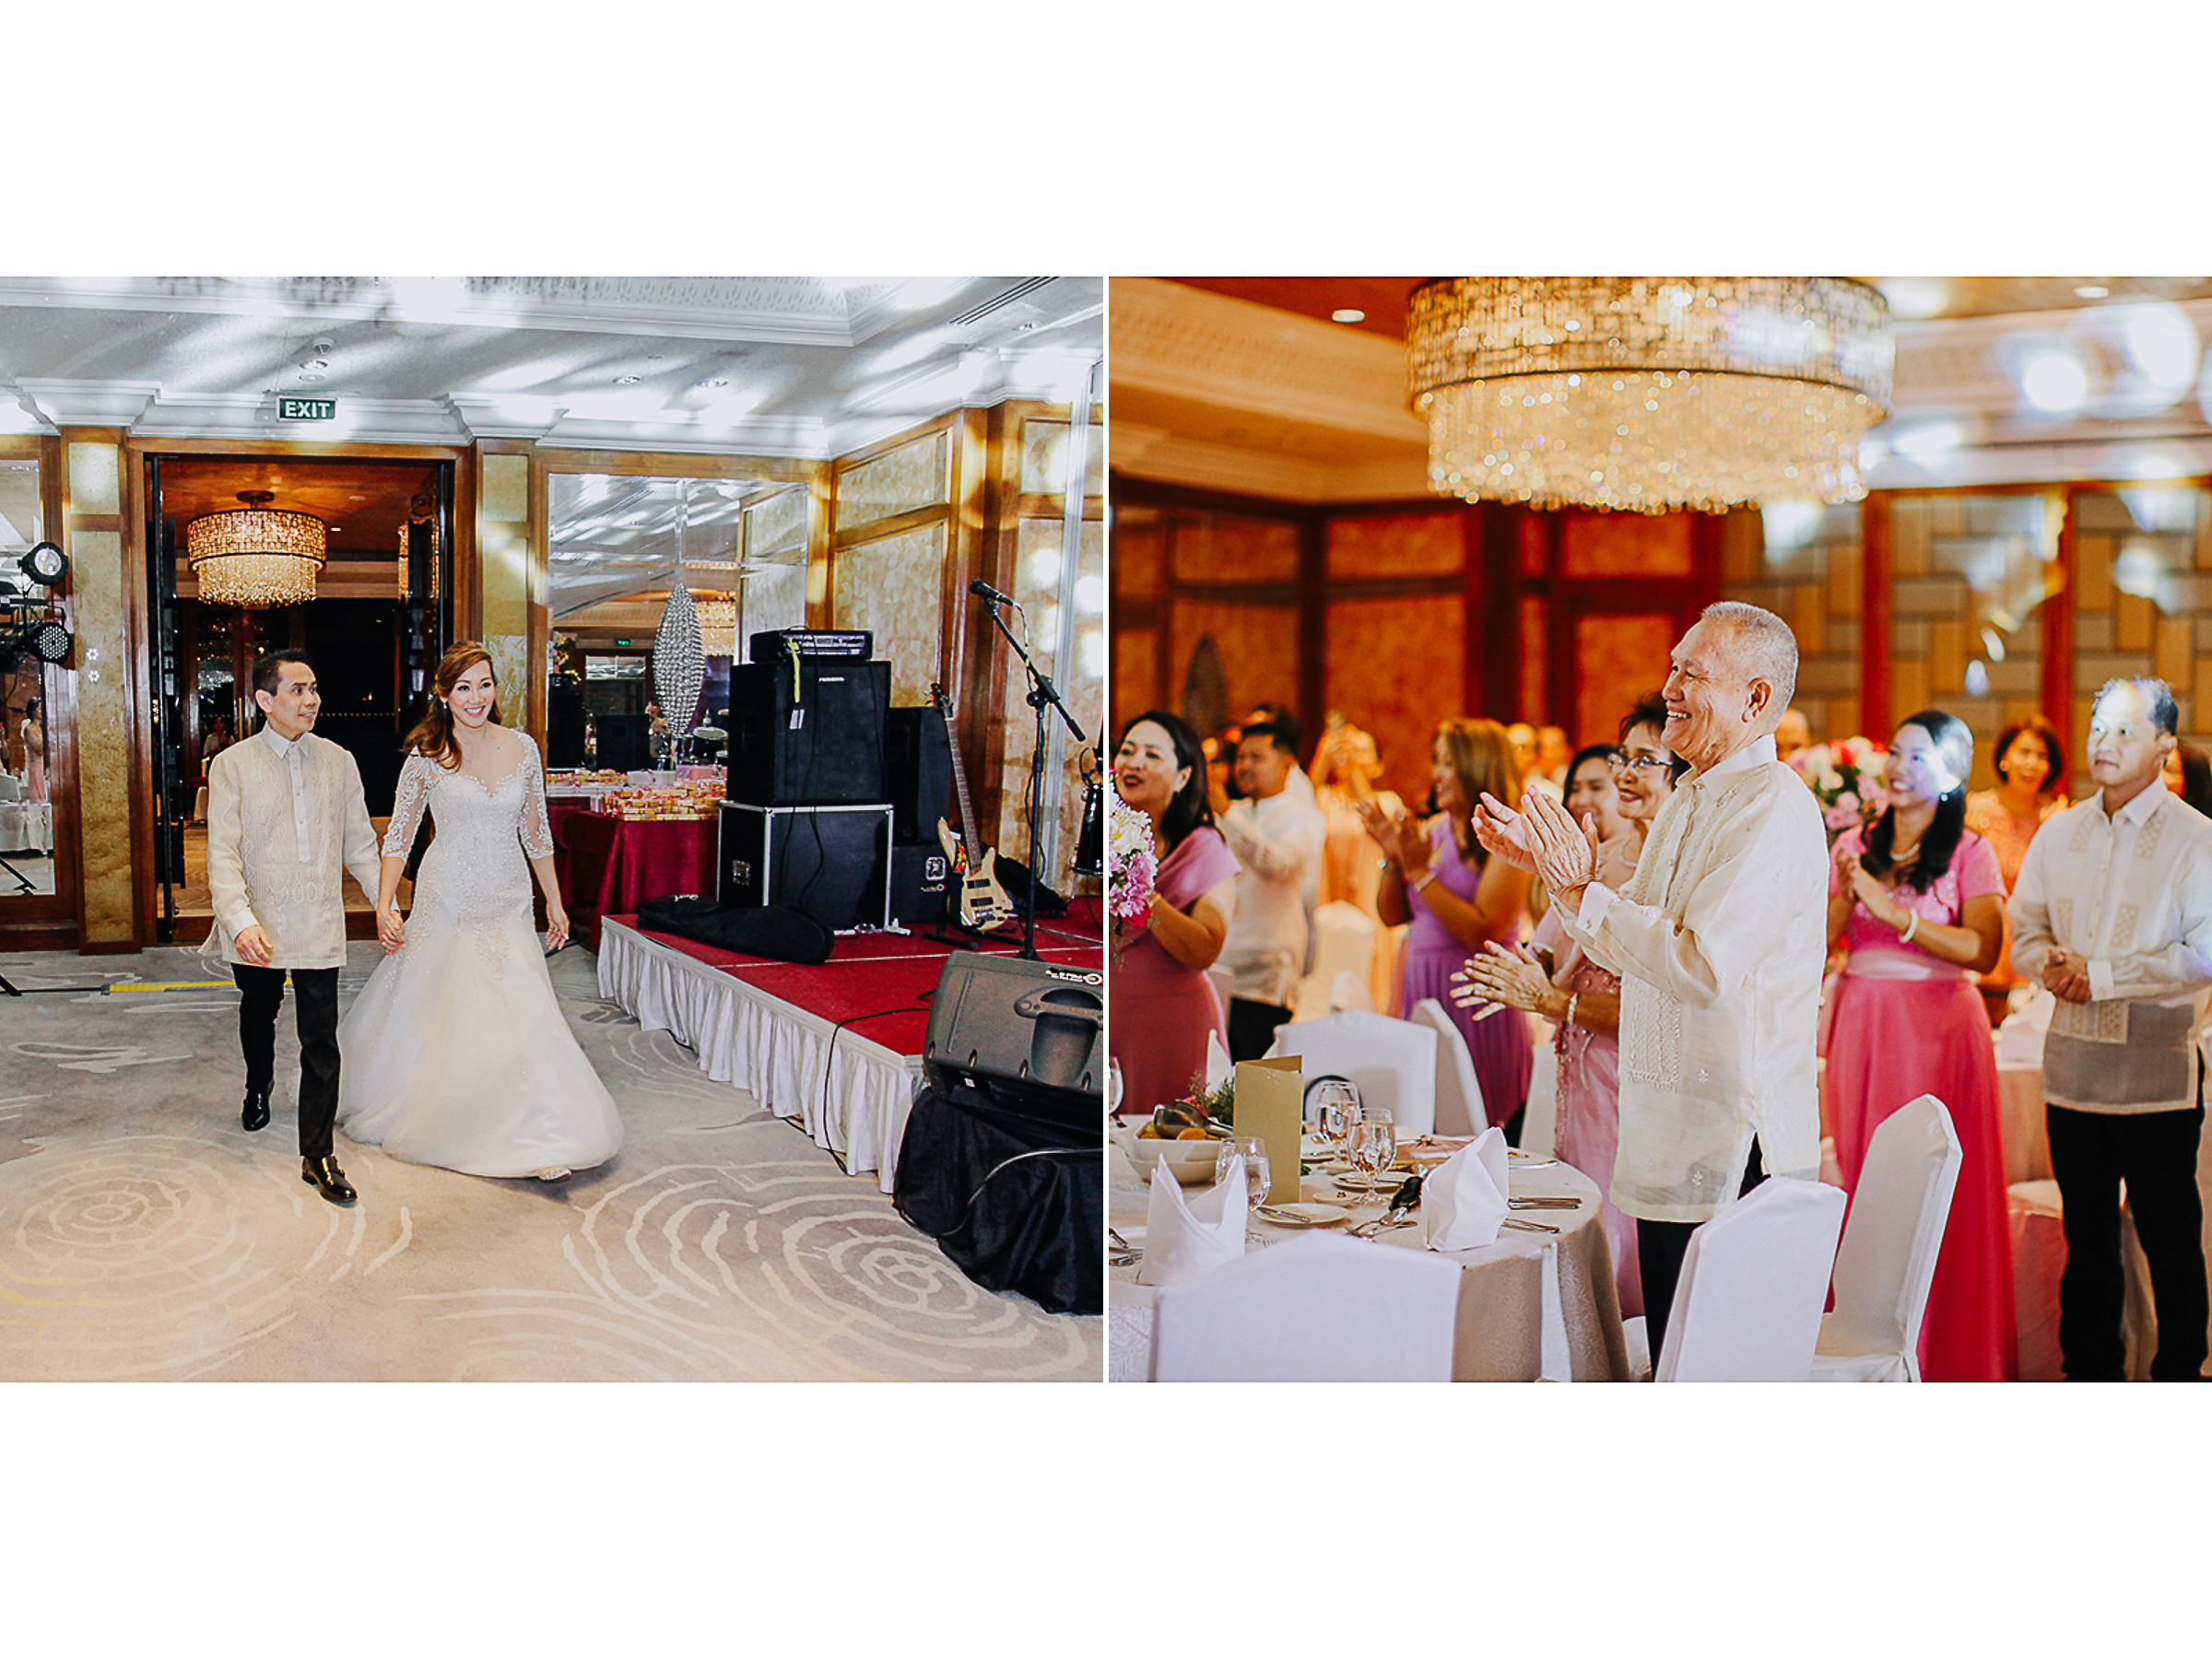 shang mactan wedding0086 - Coleen & Seigfred's Shangrila Mactan Cebu Destination Wedding